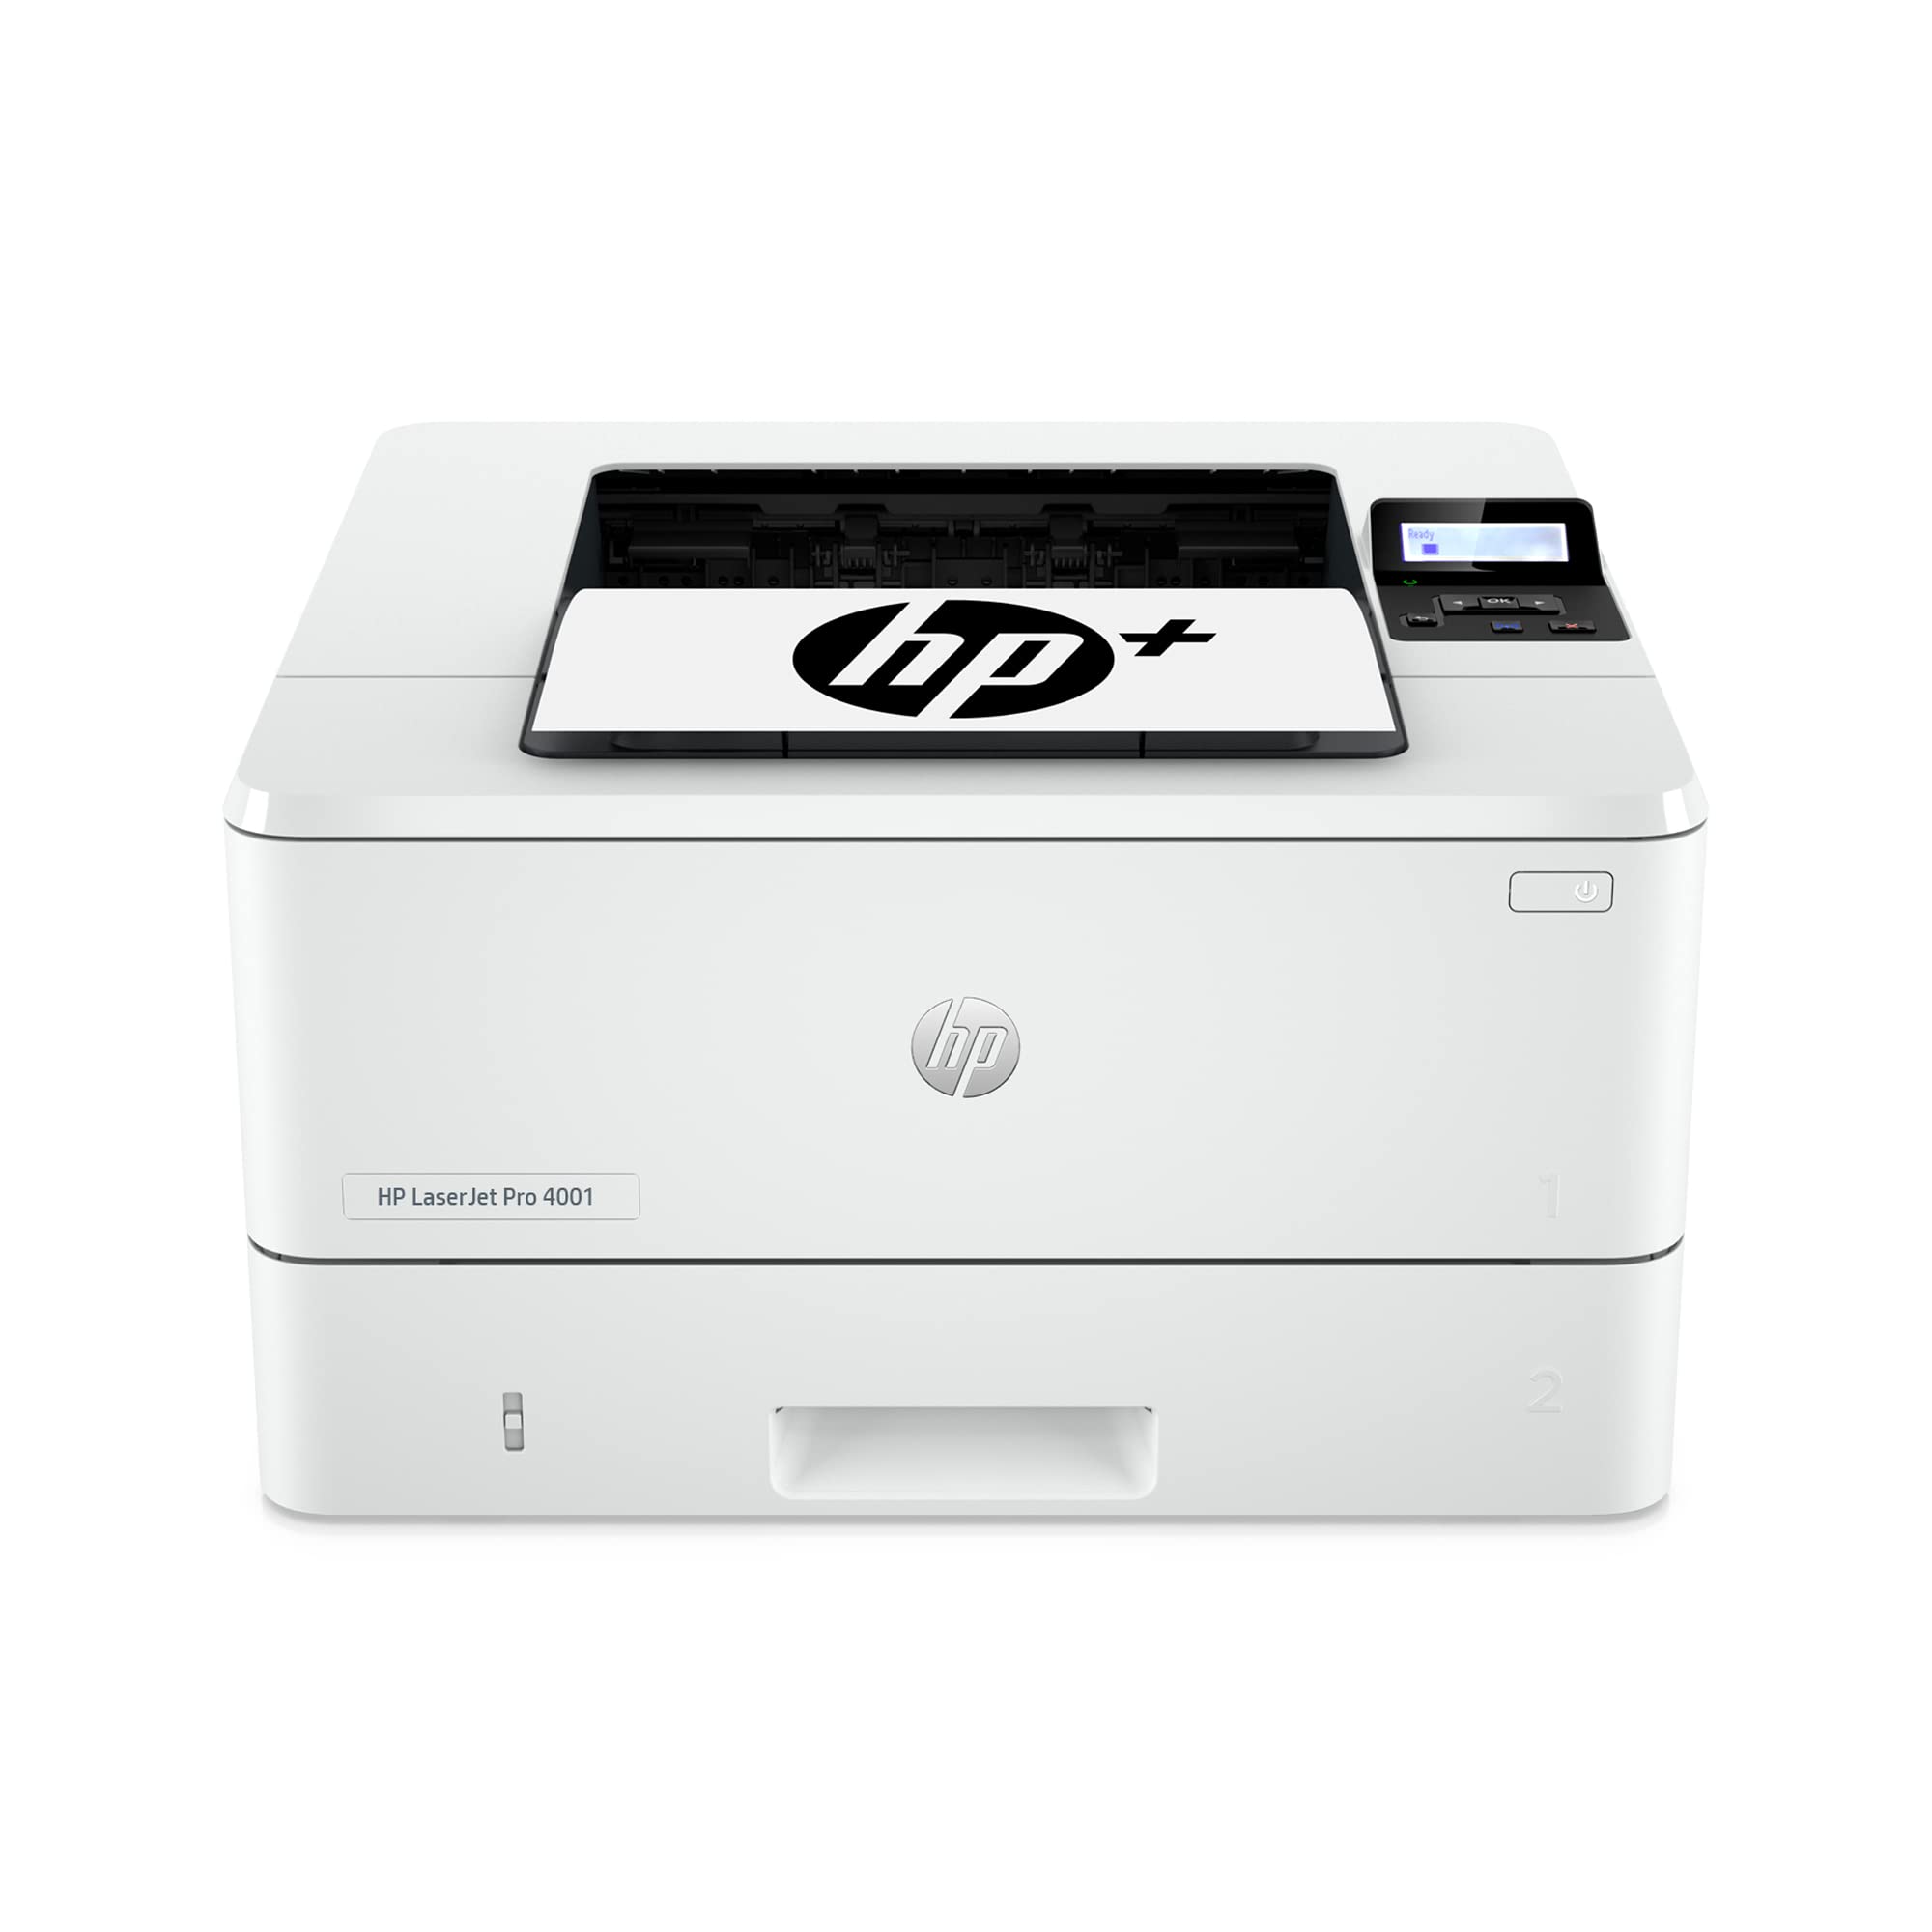 HP LaserJet Pro 4001dwe ワイヤレス白黒プリンター + スマート オフィス機能付き...